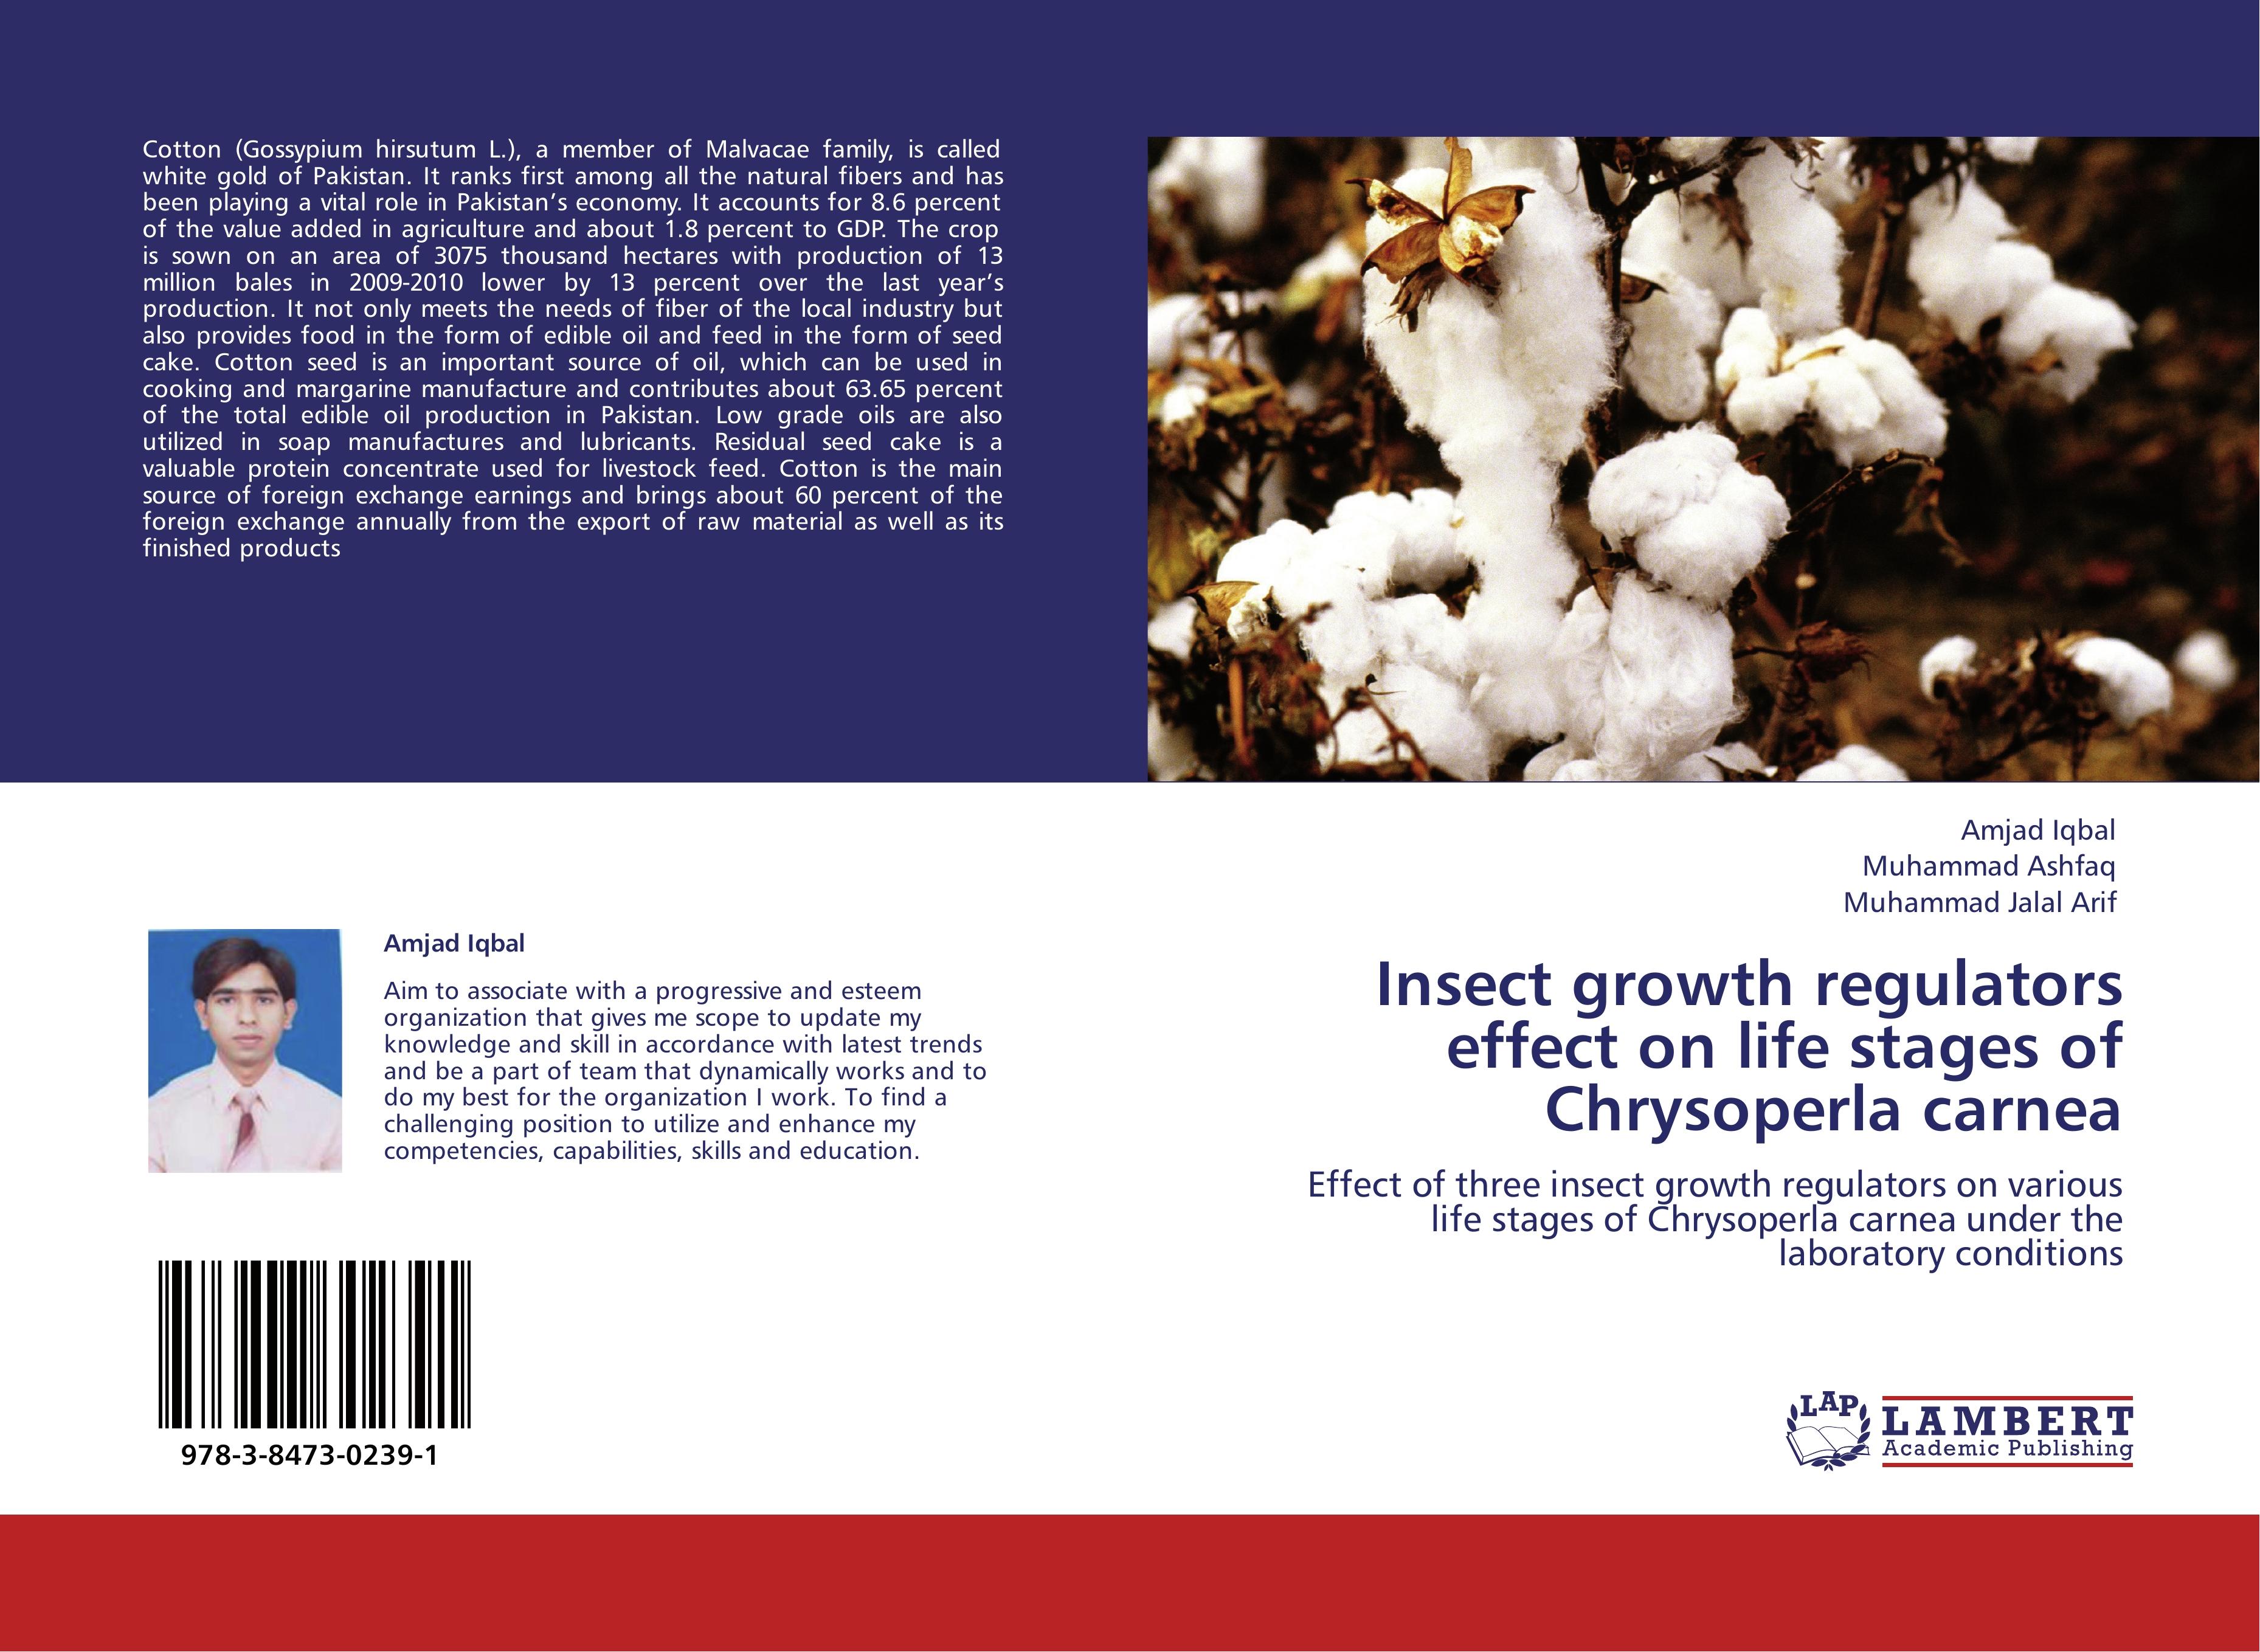 Insect growth regulators effect on life stages of Chrysoperla carnea - Amjad Iqbal|Muhammad Ashfaq|Muhammad Jalal Arif